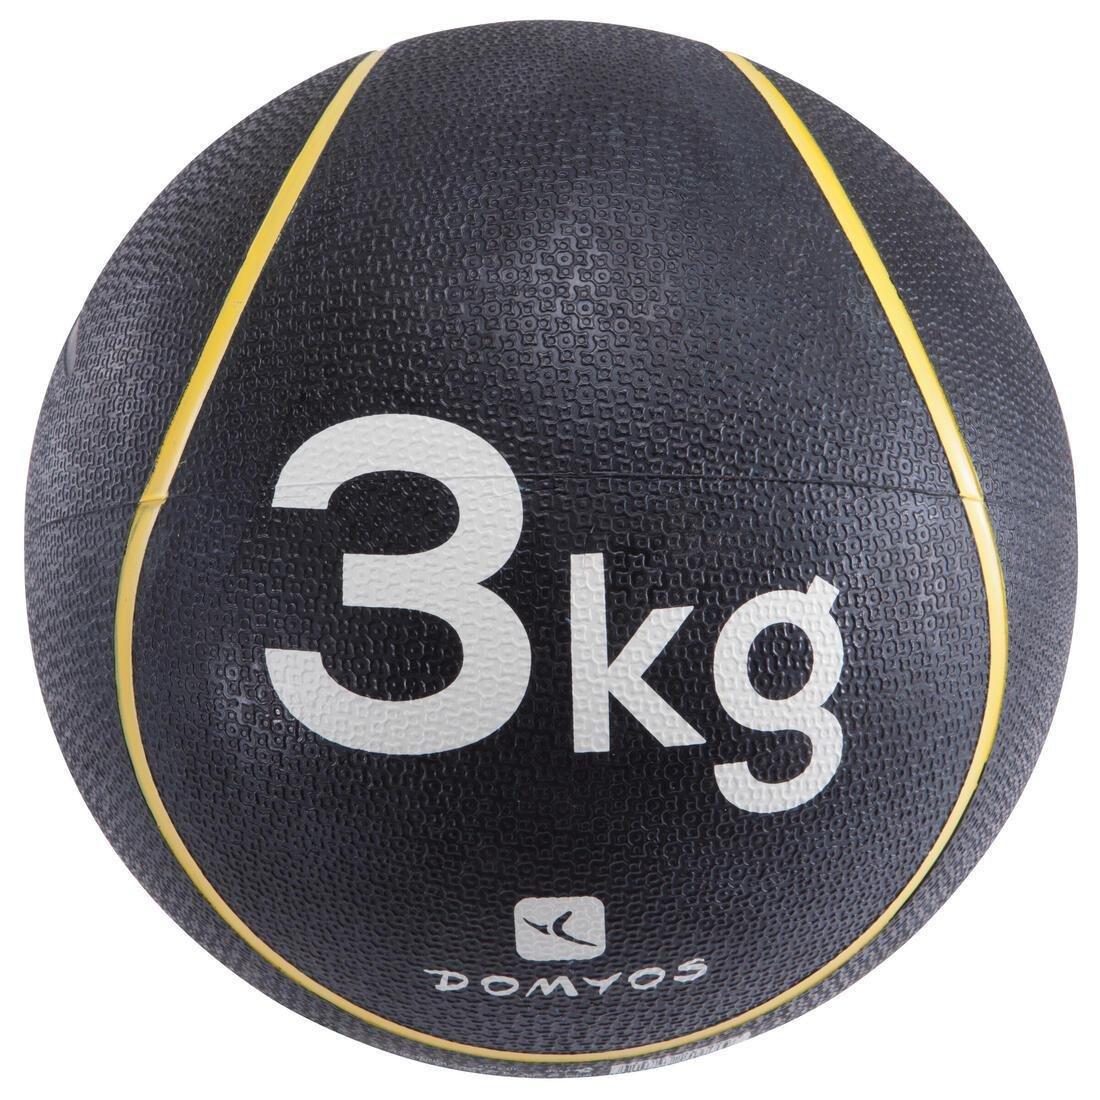 DOMYOS - Fitness Medicine Ball, Yellow